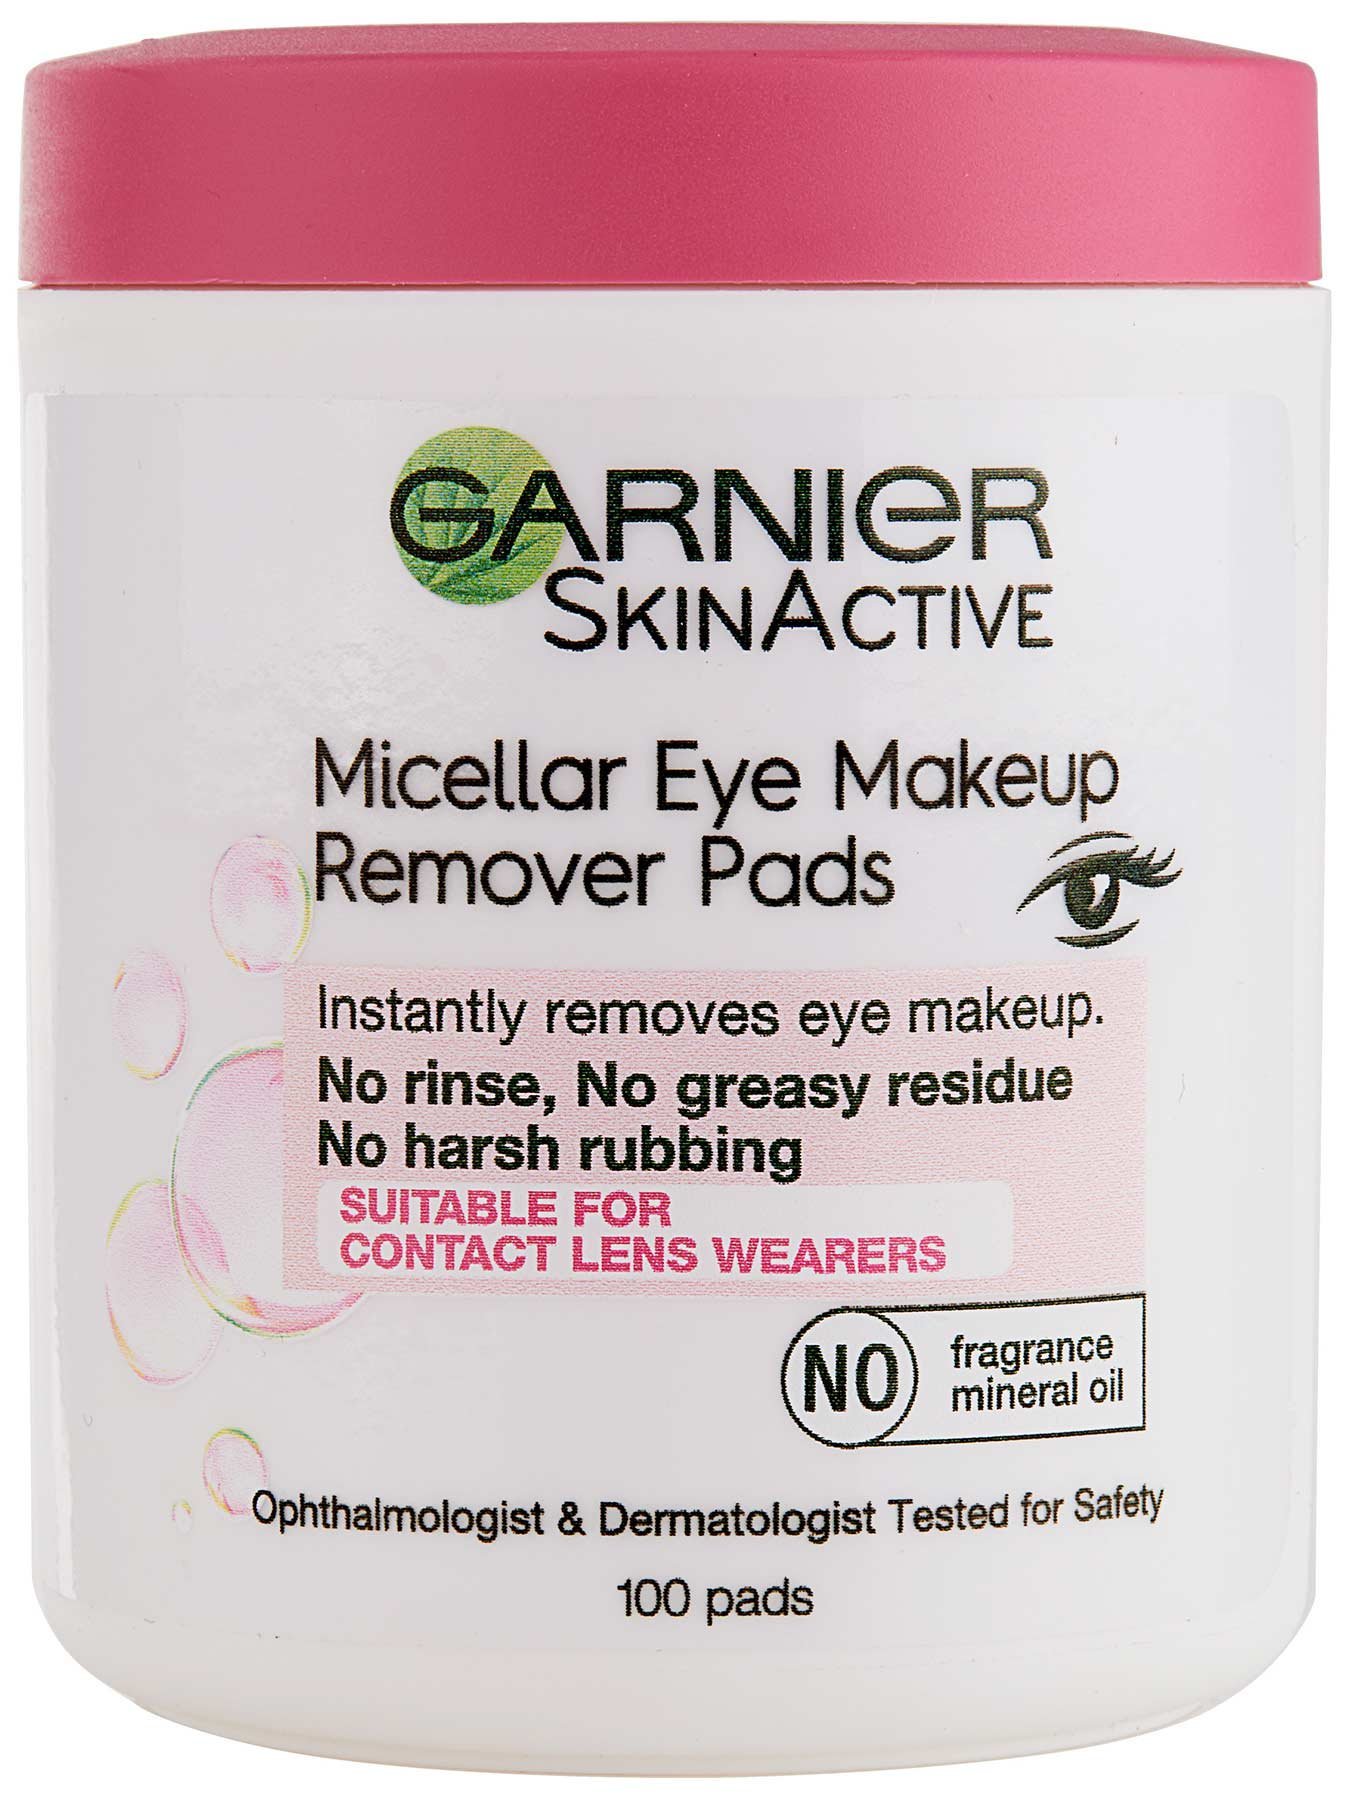 Micellar Eye Makeup Remover Cotton Pads - Garnier SkinActive